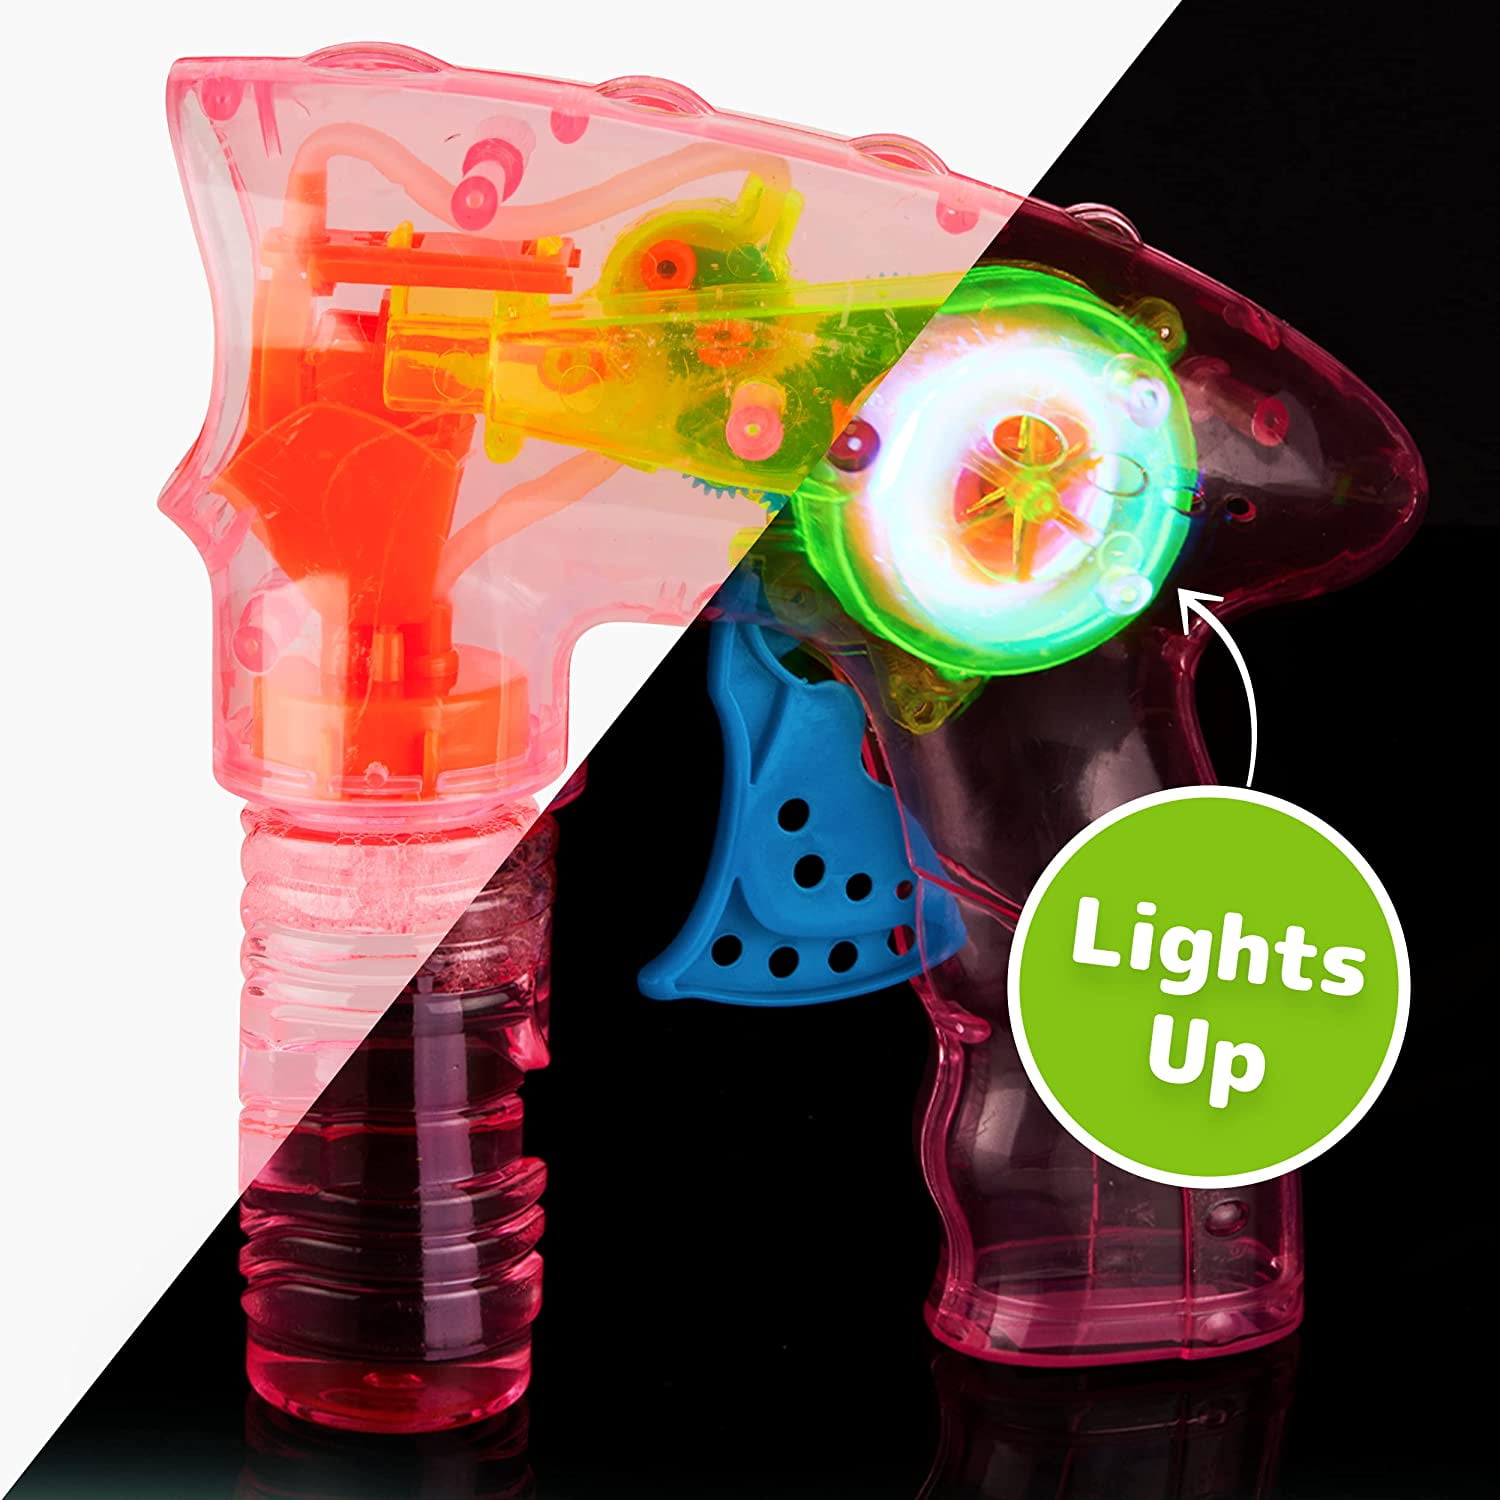 Led Light up Gatling Bubble Gun Demo 2021- Does it Work？ 